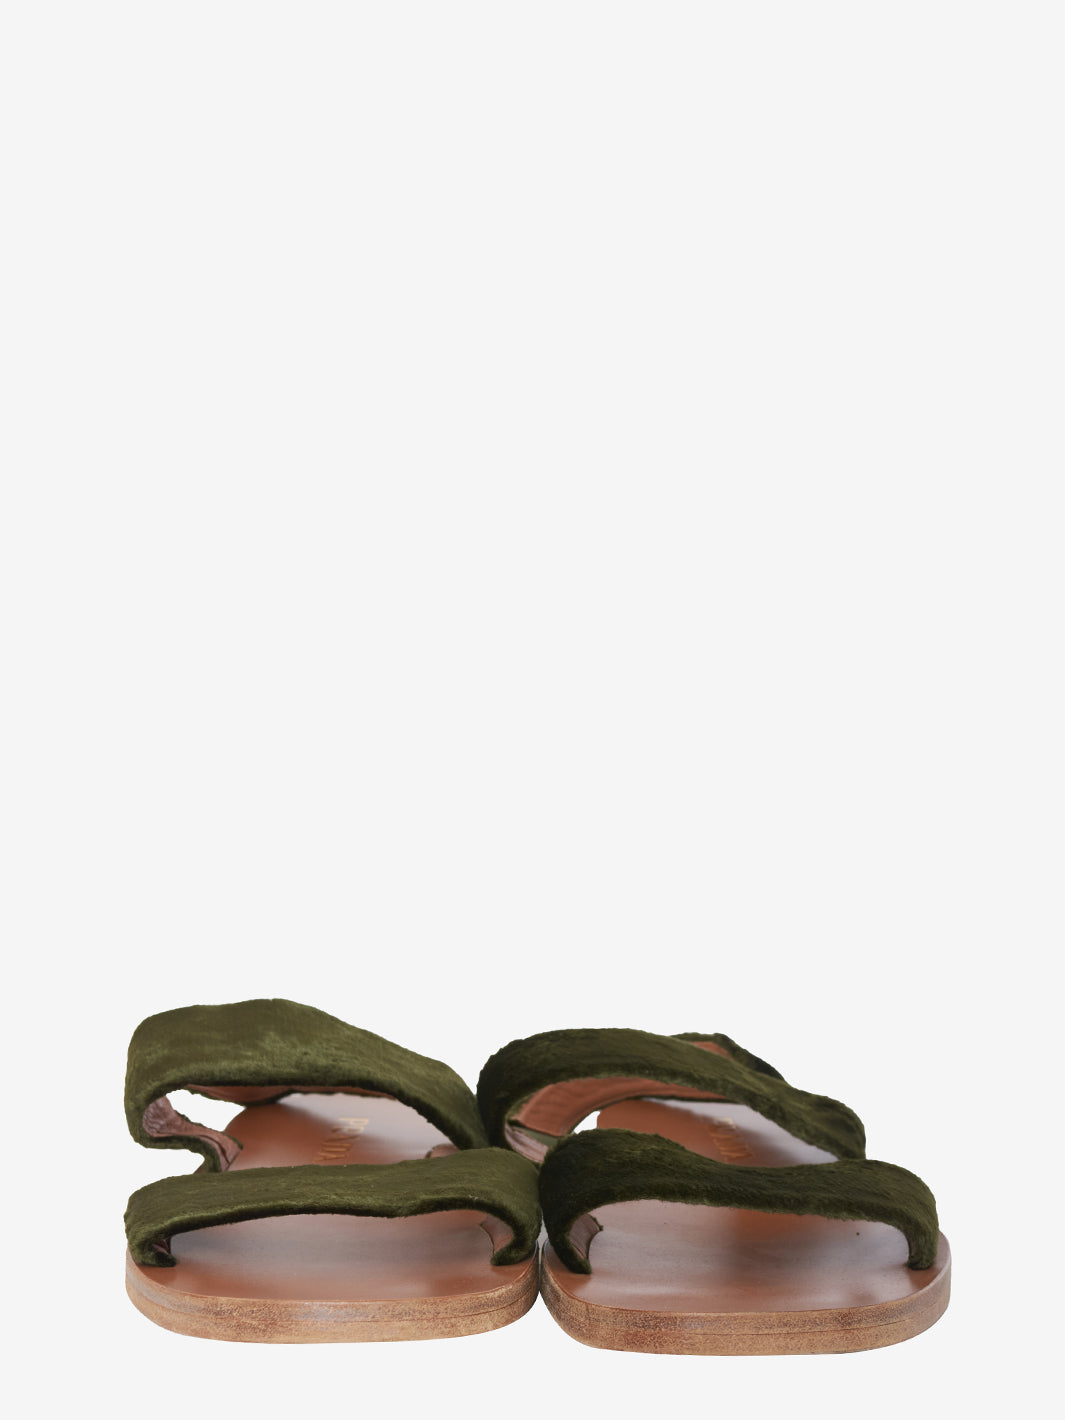 Prada Green leather sandal